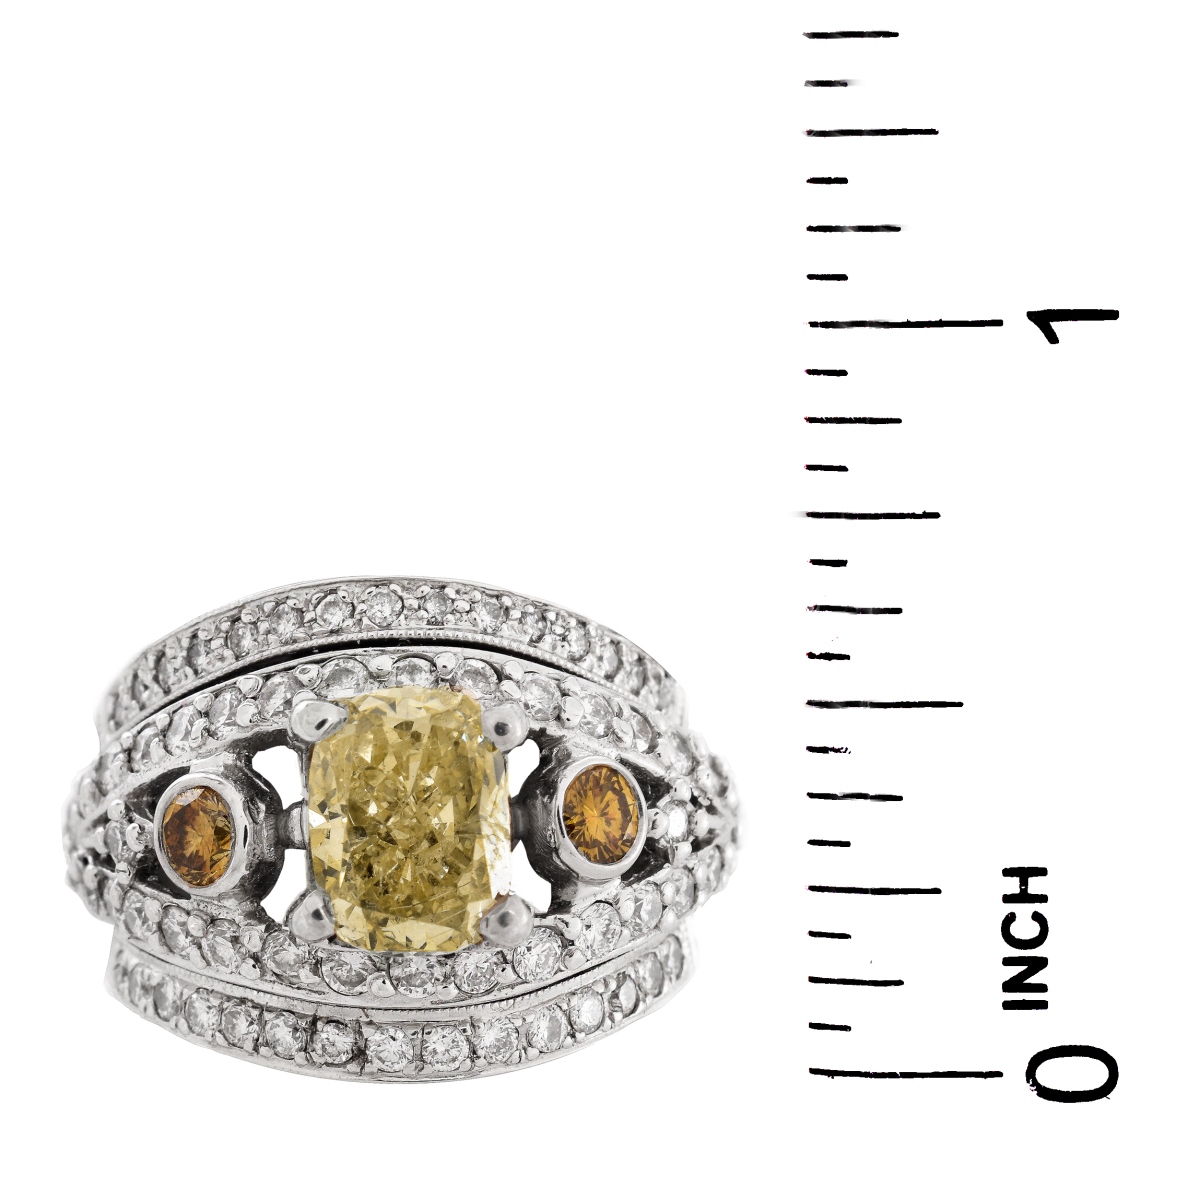 AGI 2.13 Carat Fancy Yellow Diamond Ring